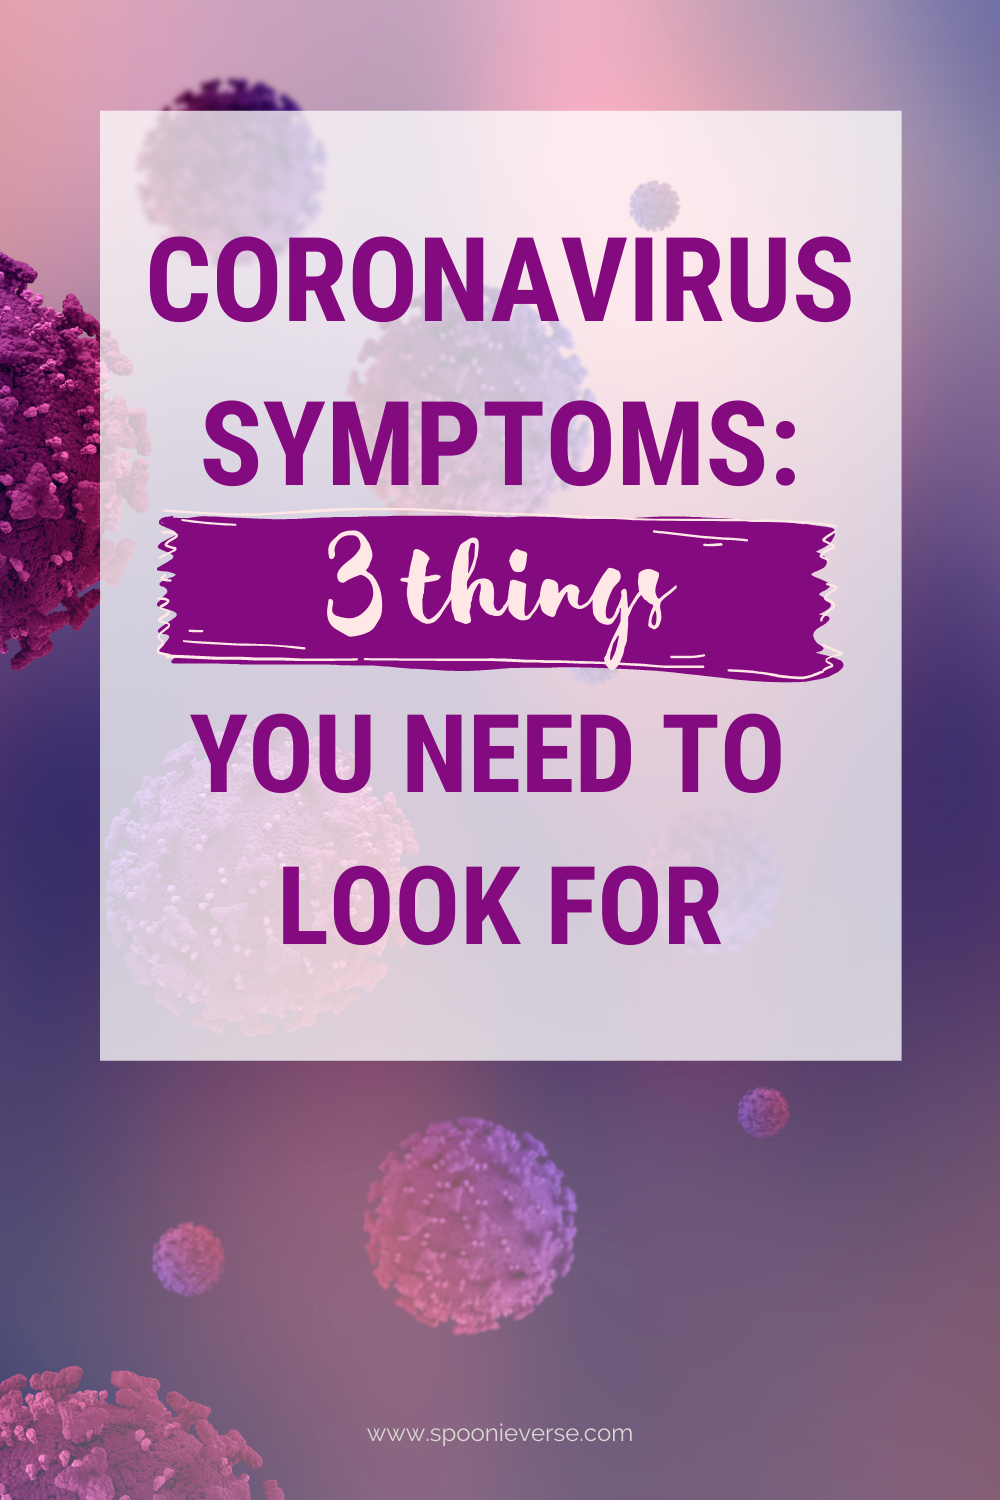 Coronavirus symptoms: 3 things you need to look for